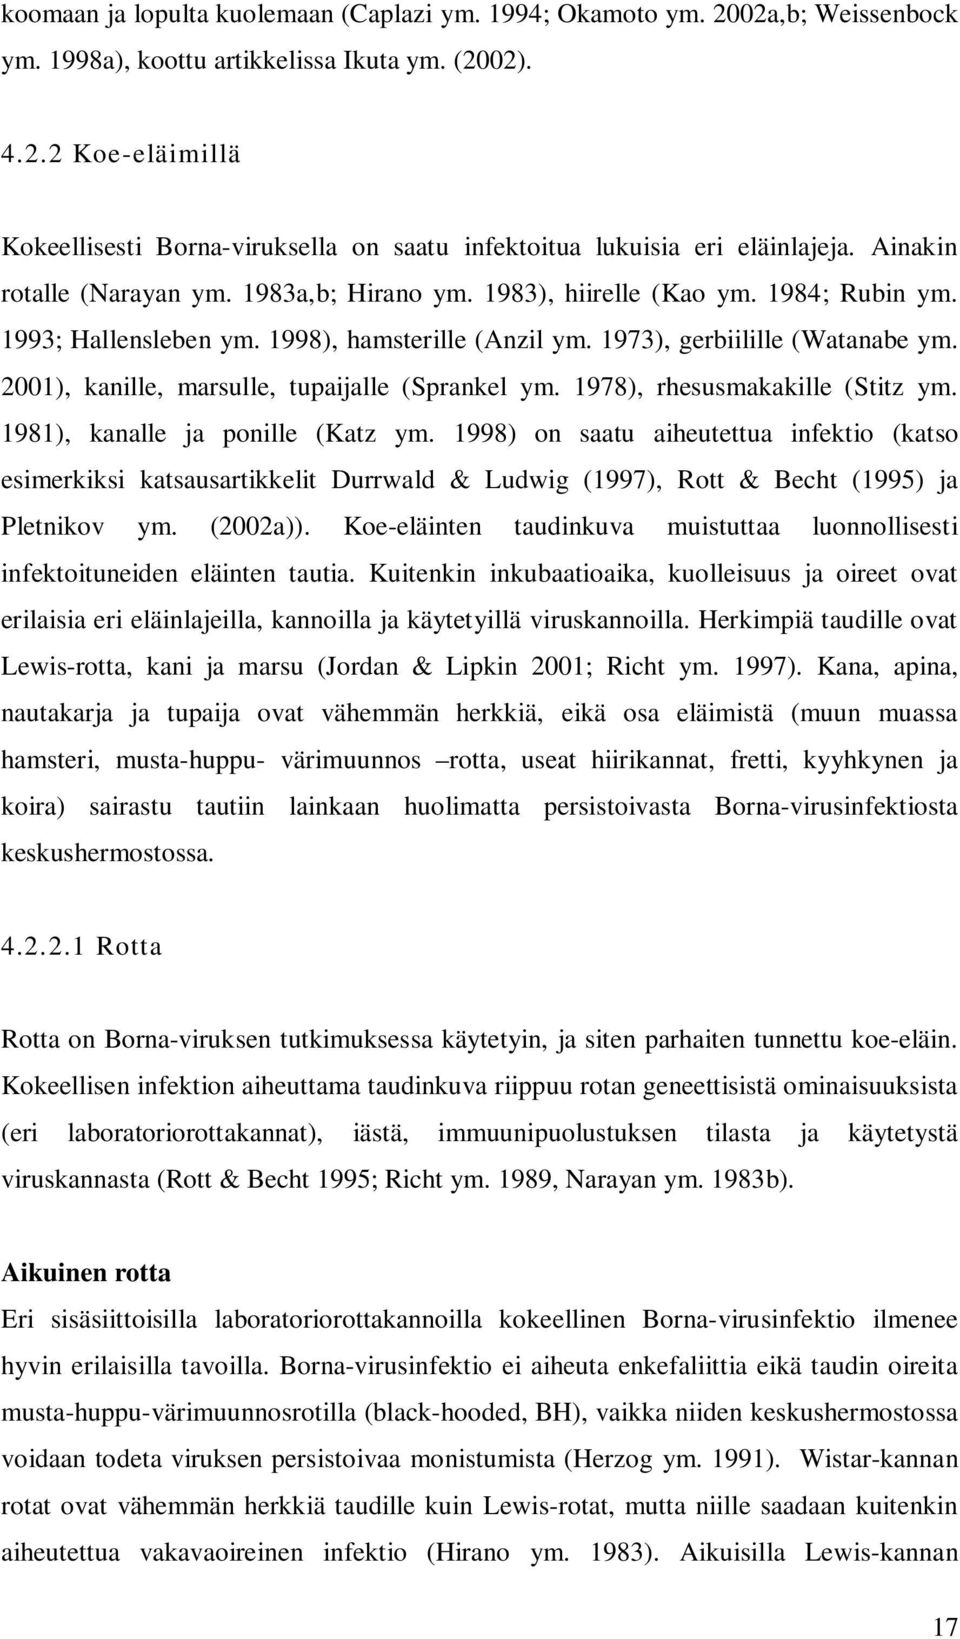 2001), kanille, marsulle, tupaijalle (Sprankel ym. 1978), rhesusmakakille (Stitz ym. 1981), kanalle ja ponille (Katz ym.